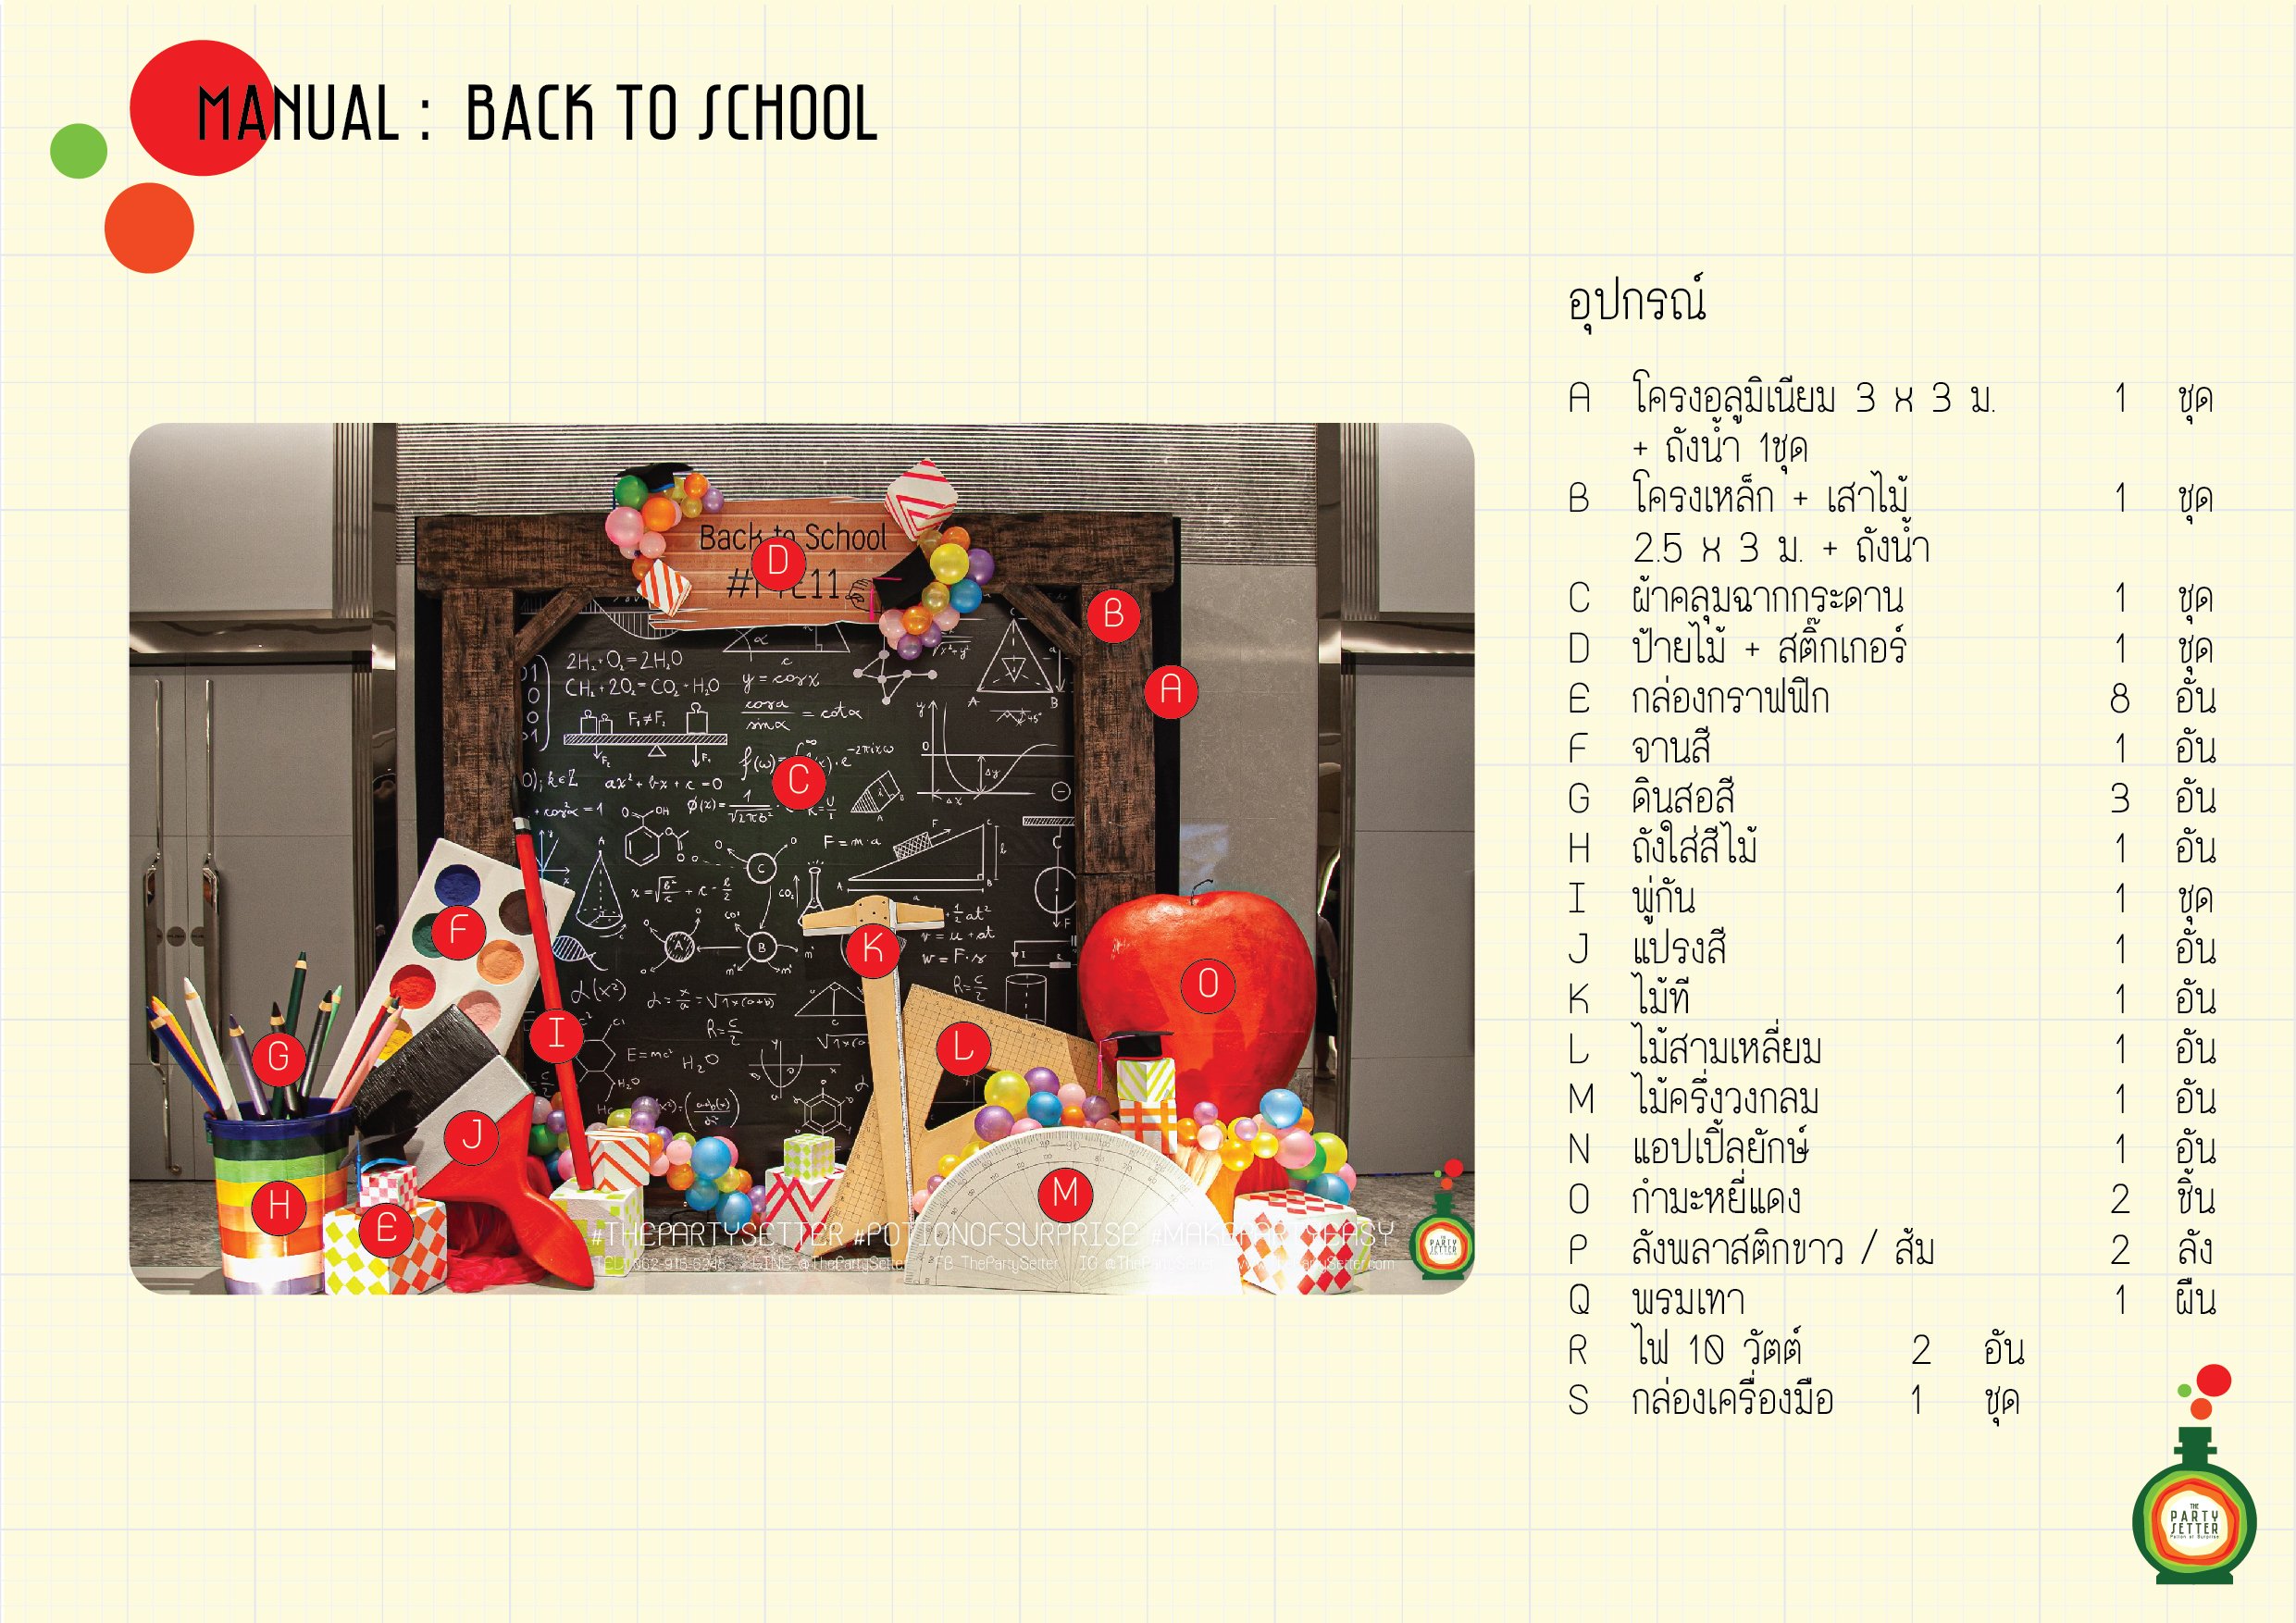 Manual_Back to School-2-00-01.jpg